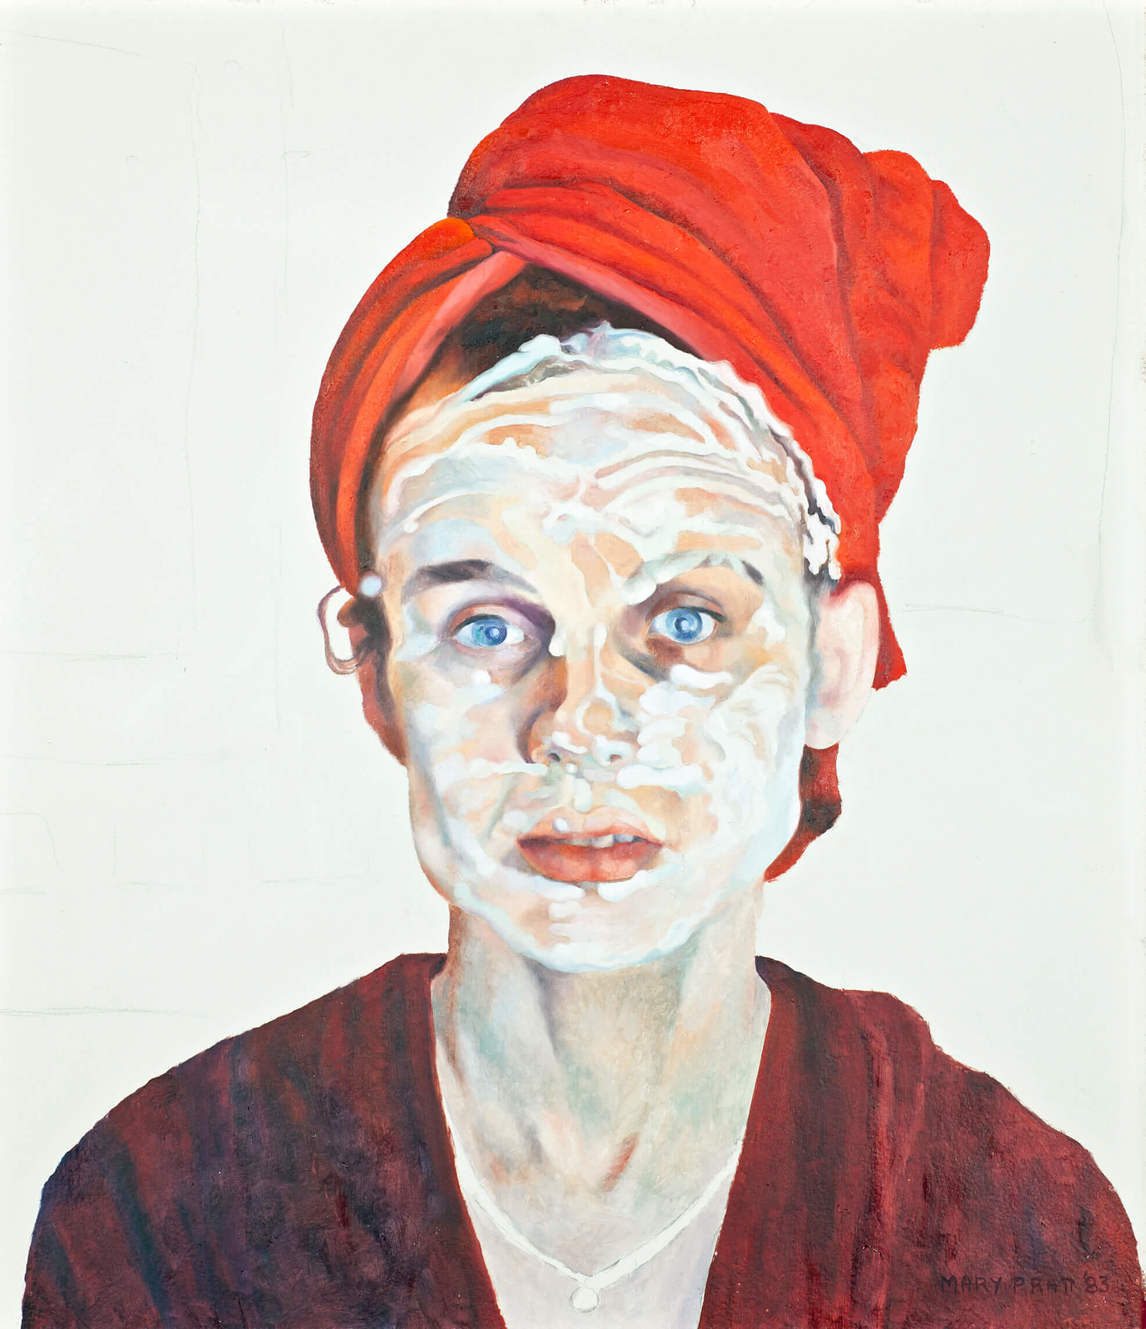 Mary Pratt, Cold Cream, 1983